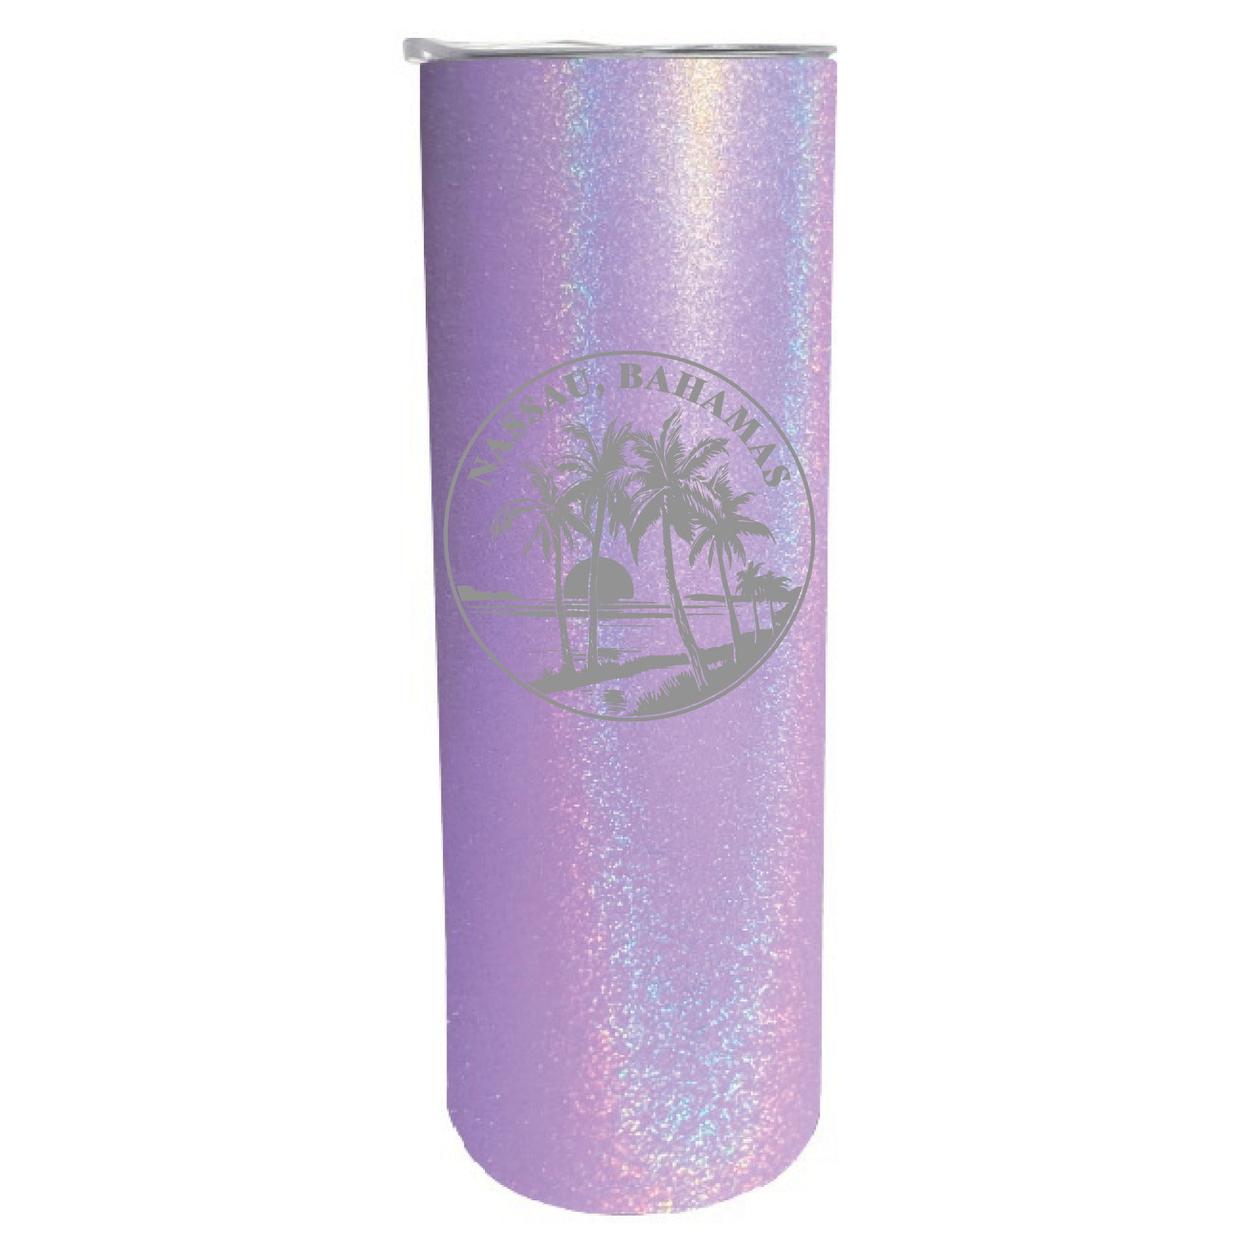 Nassau The Bahamas Souvenir 20 Oz Engraved Insulated Stainless Steel Skinny Tumbler - Purple Glitter,,4-Pack